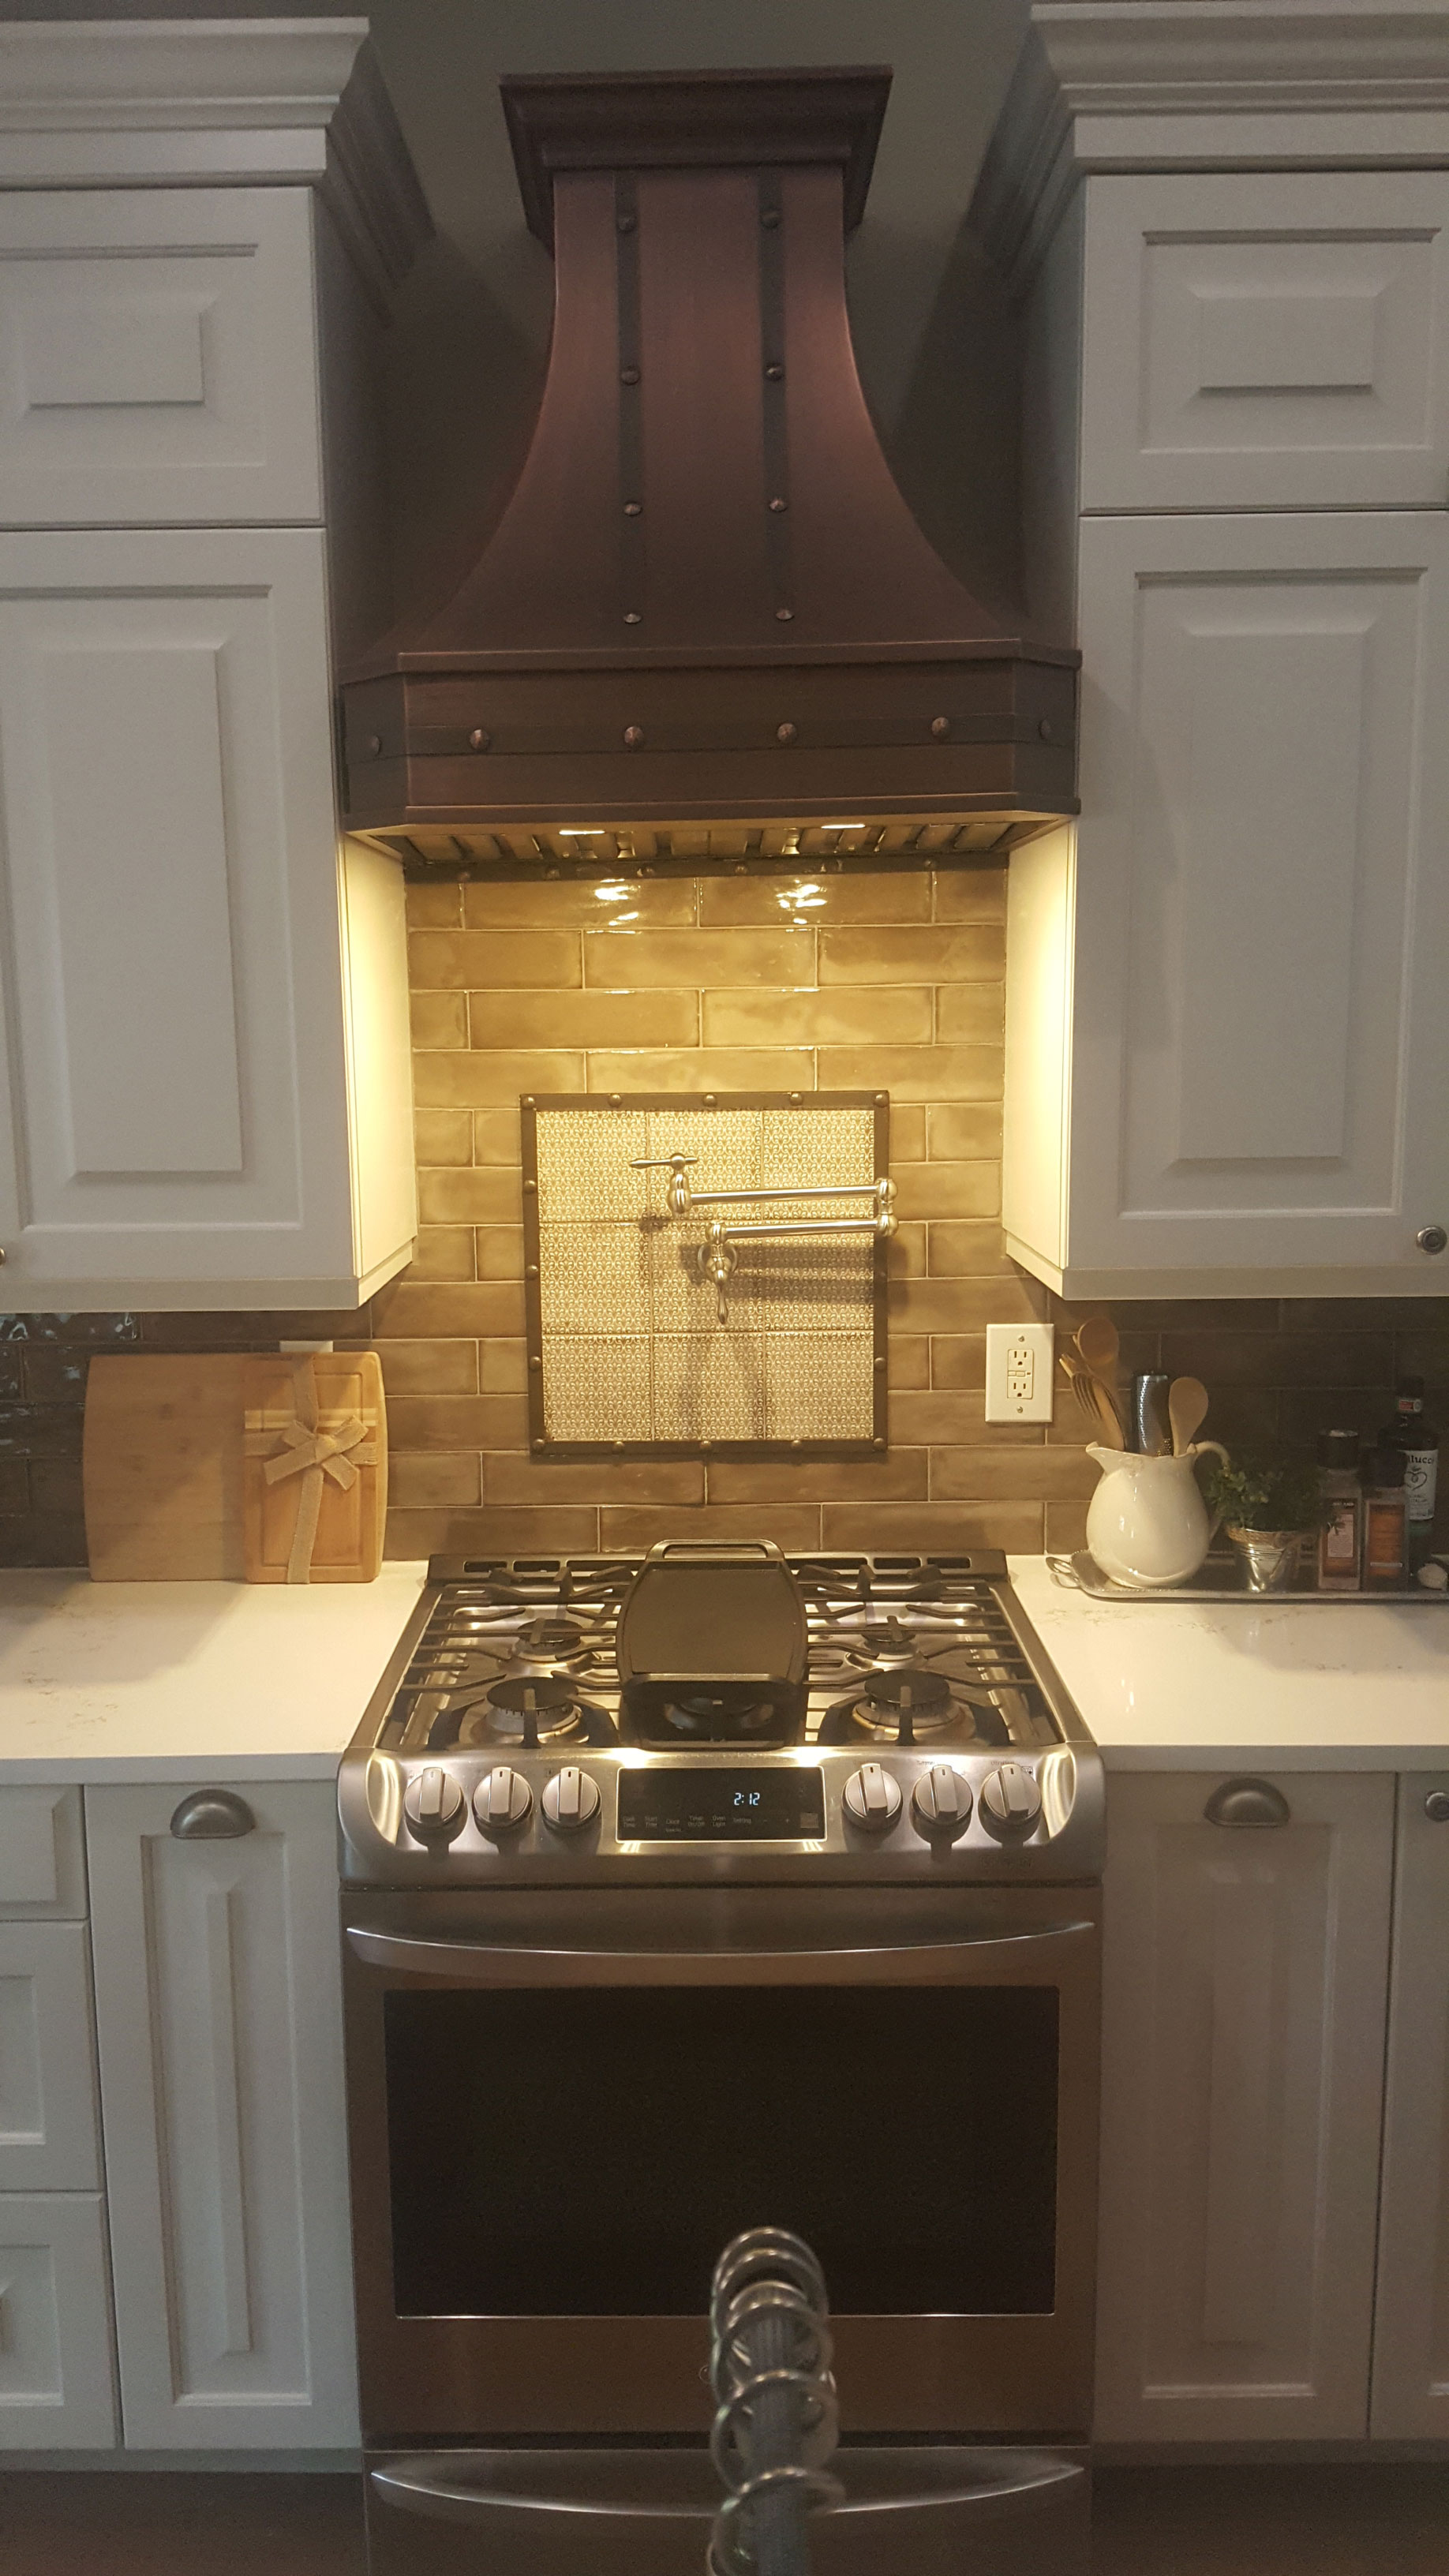 Unleash french-inspired kitchen design idea with copper range hood, white cabinets with grey kitchen countertops captivating brick backsplash